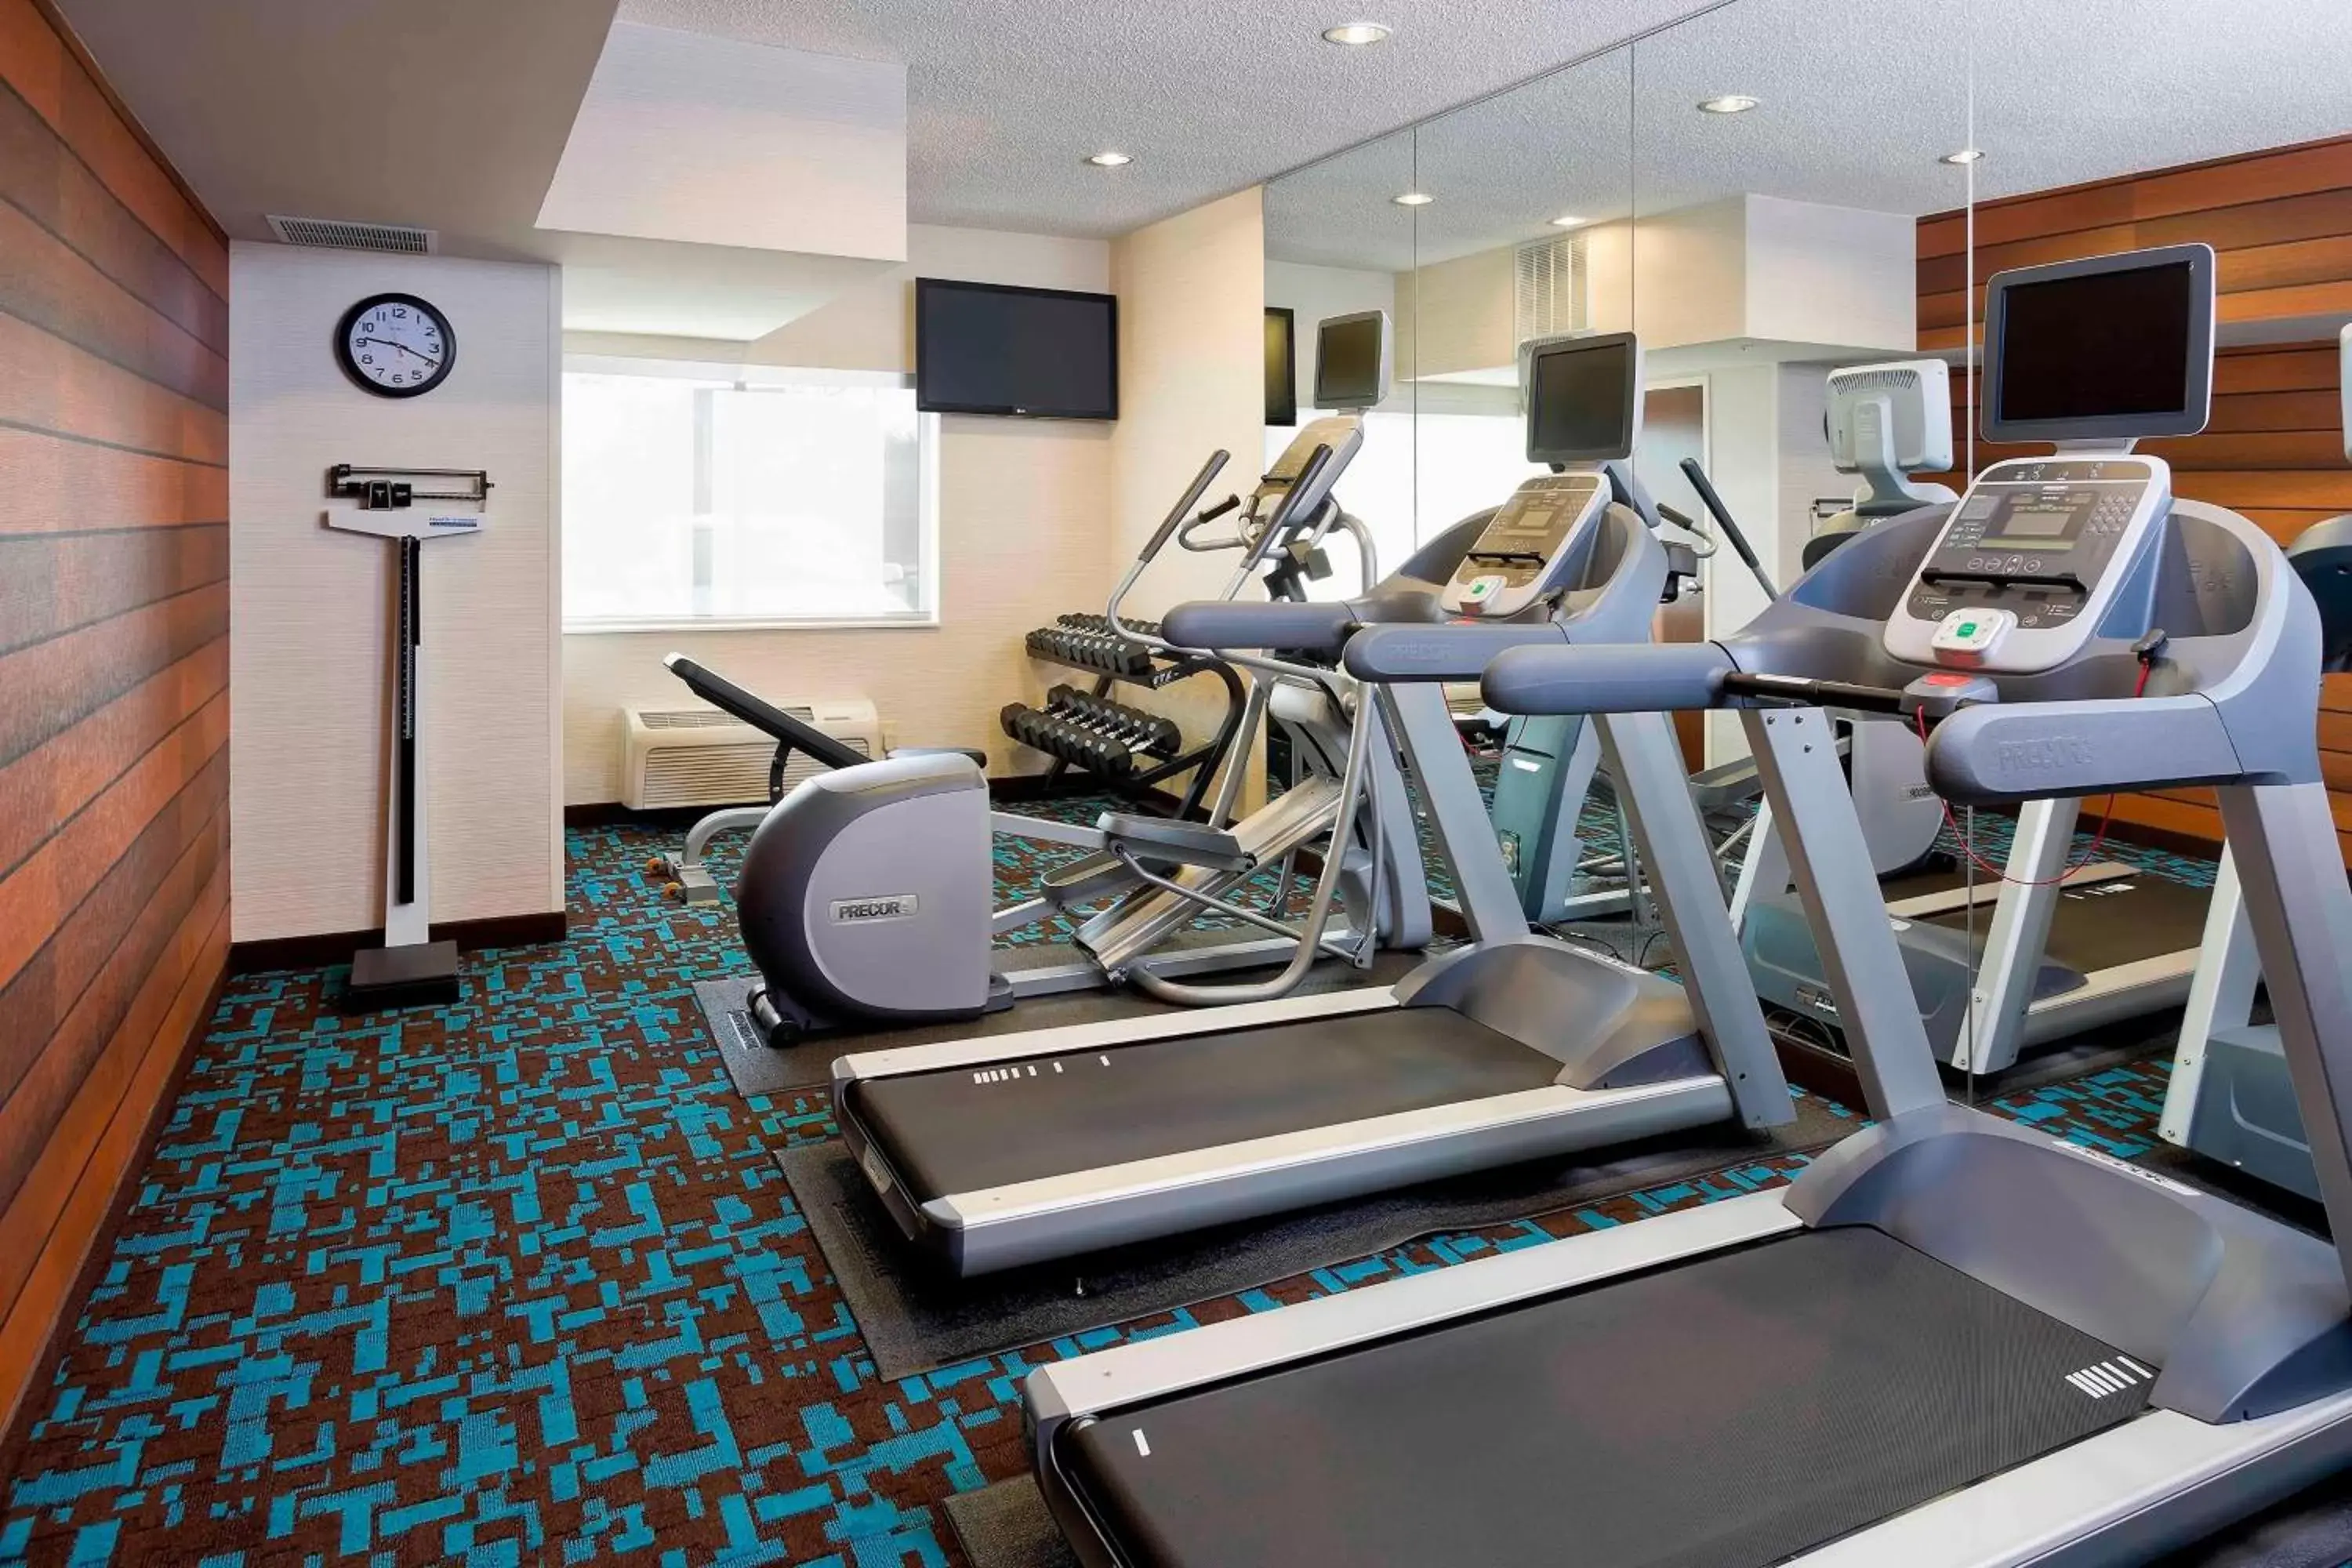 Fitness centre/facilities, Fitness Center/Facilities in Fairfield Inn & Suites Mansfield Ontario